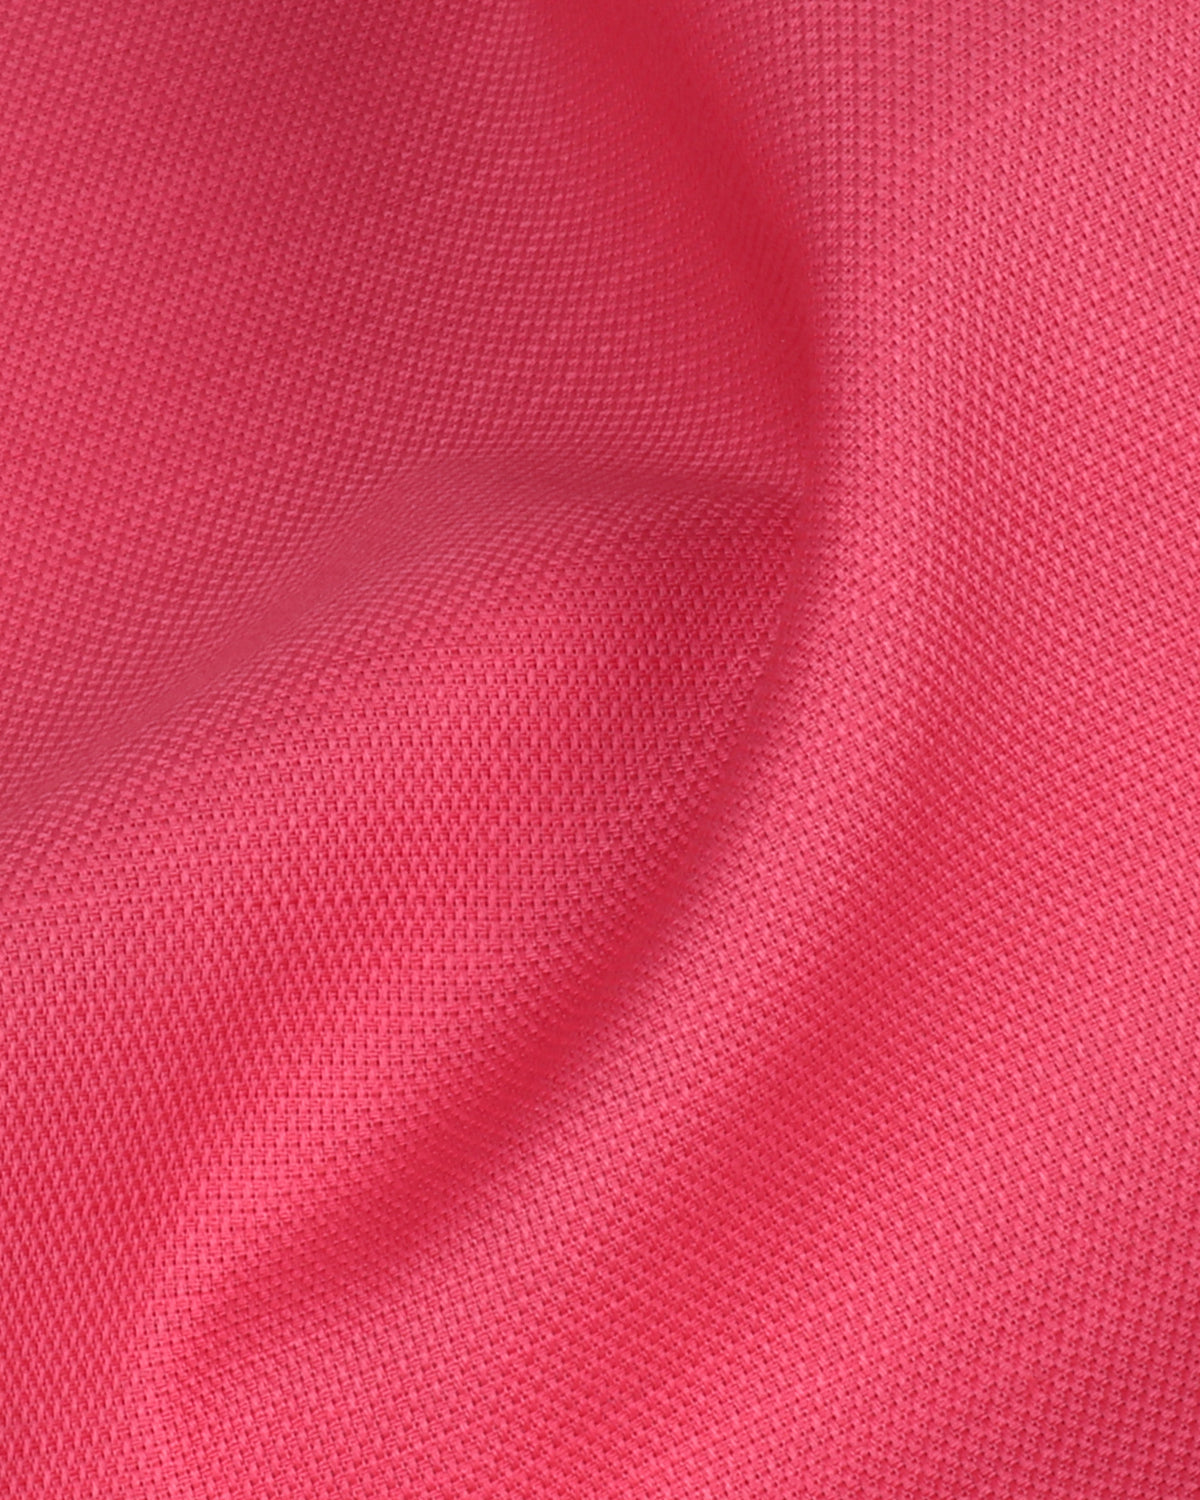 long sleeve red shirt